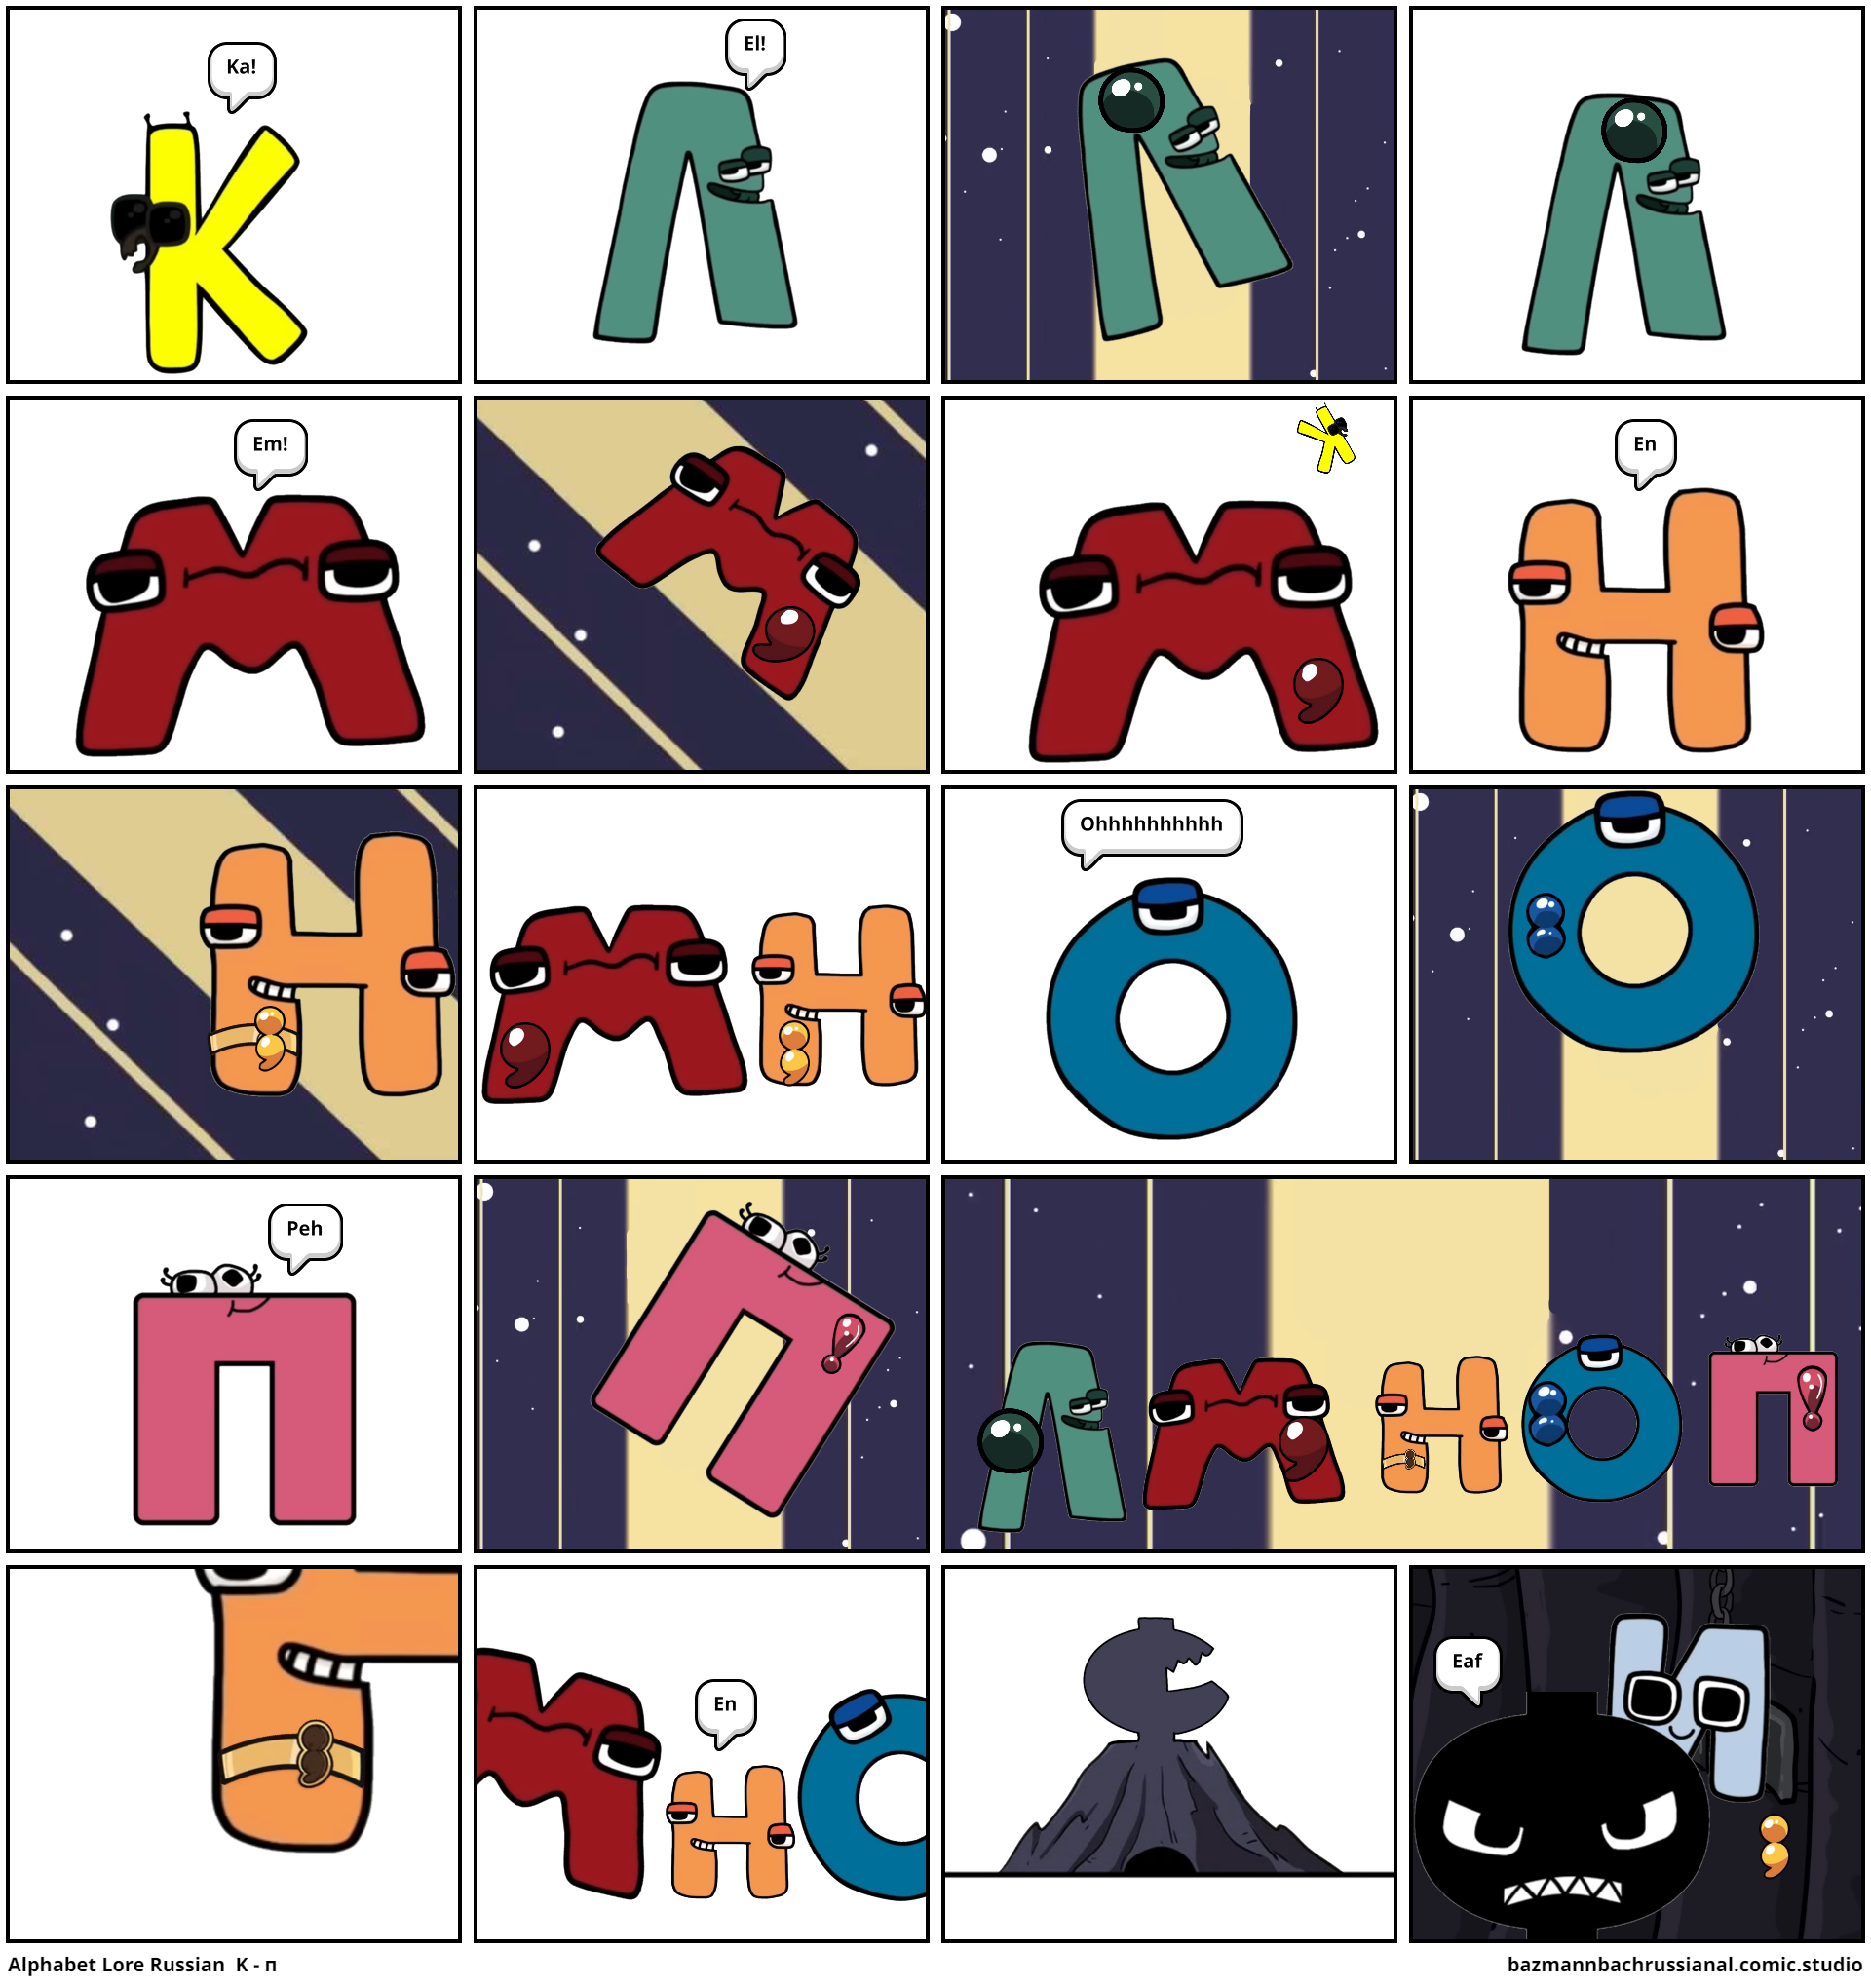 Russian alphabet lore part 1 Thumbnail - Comic Studio